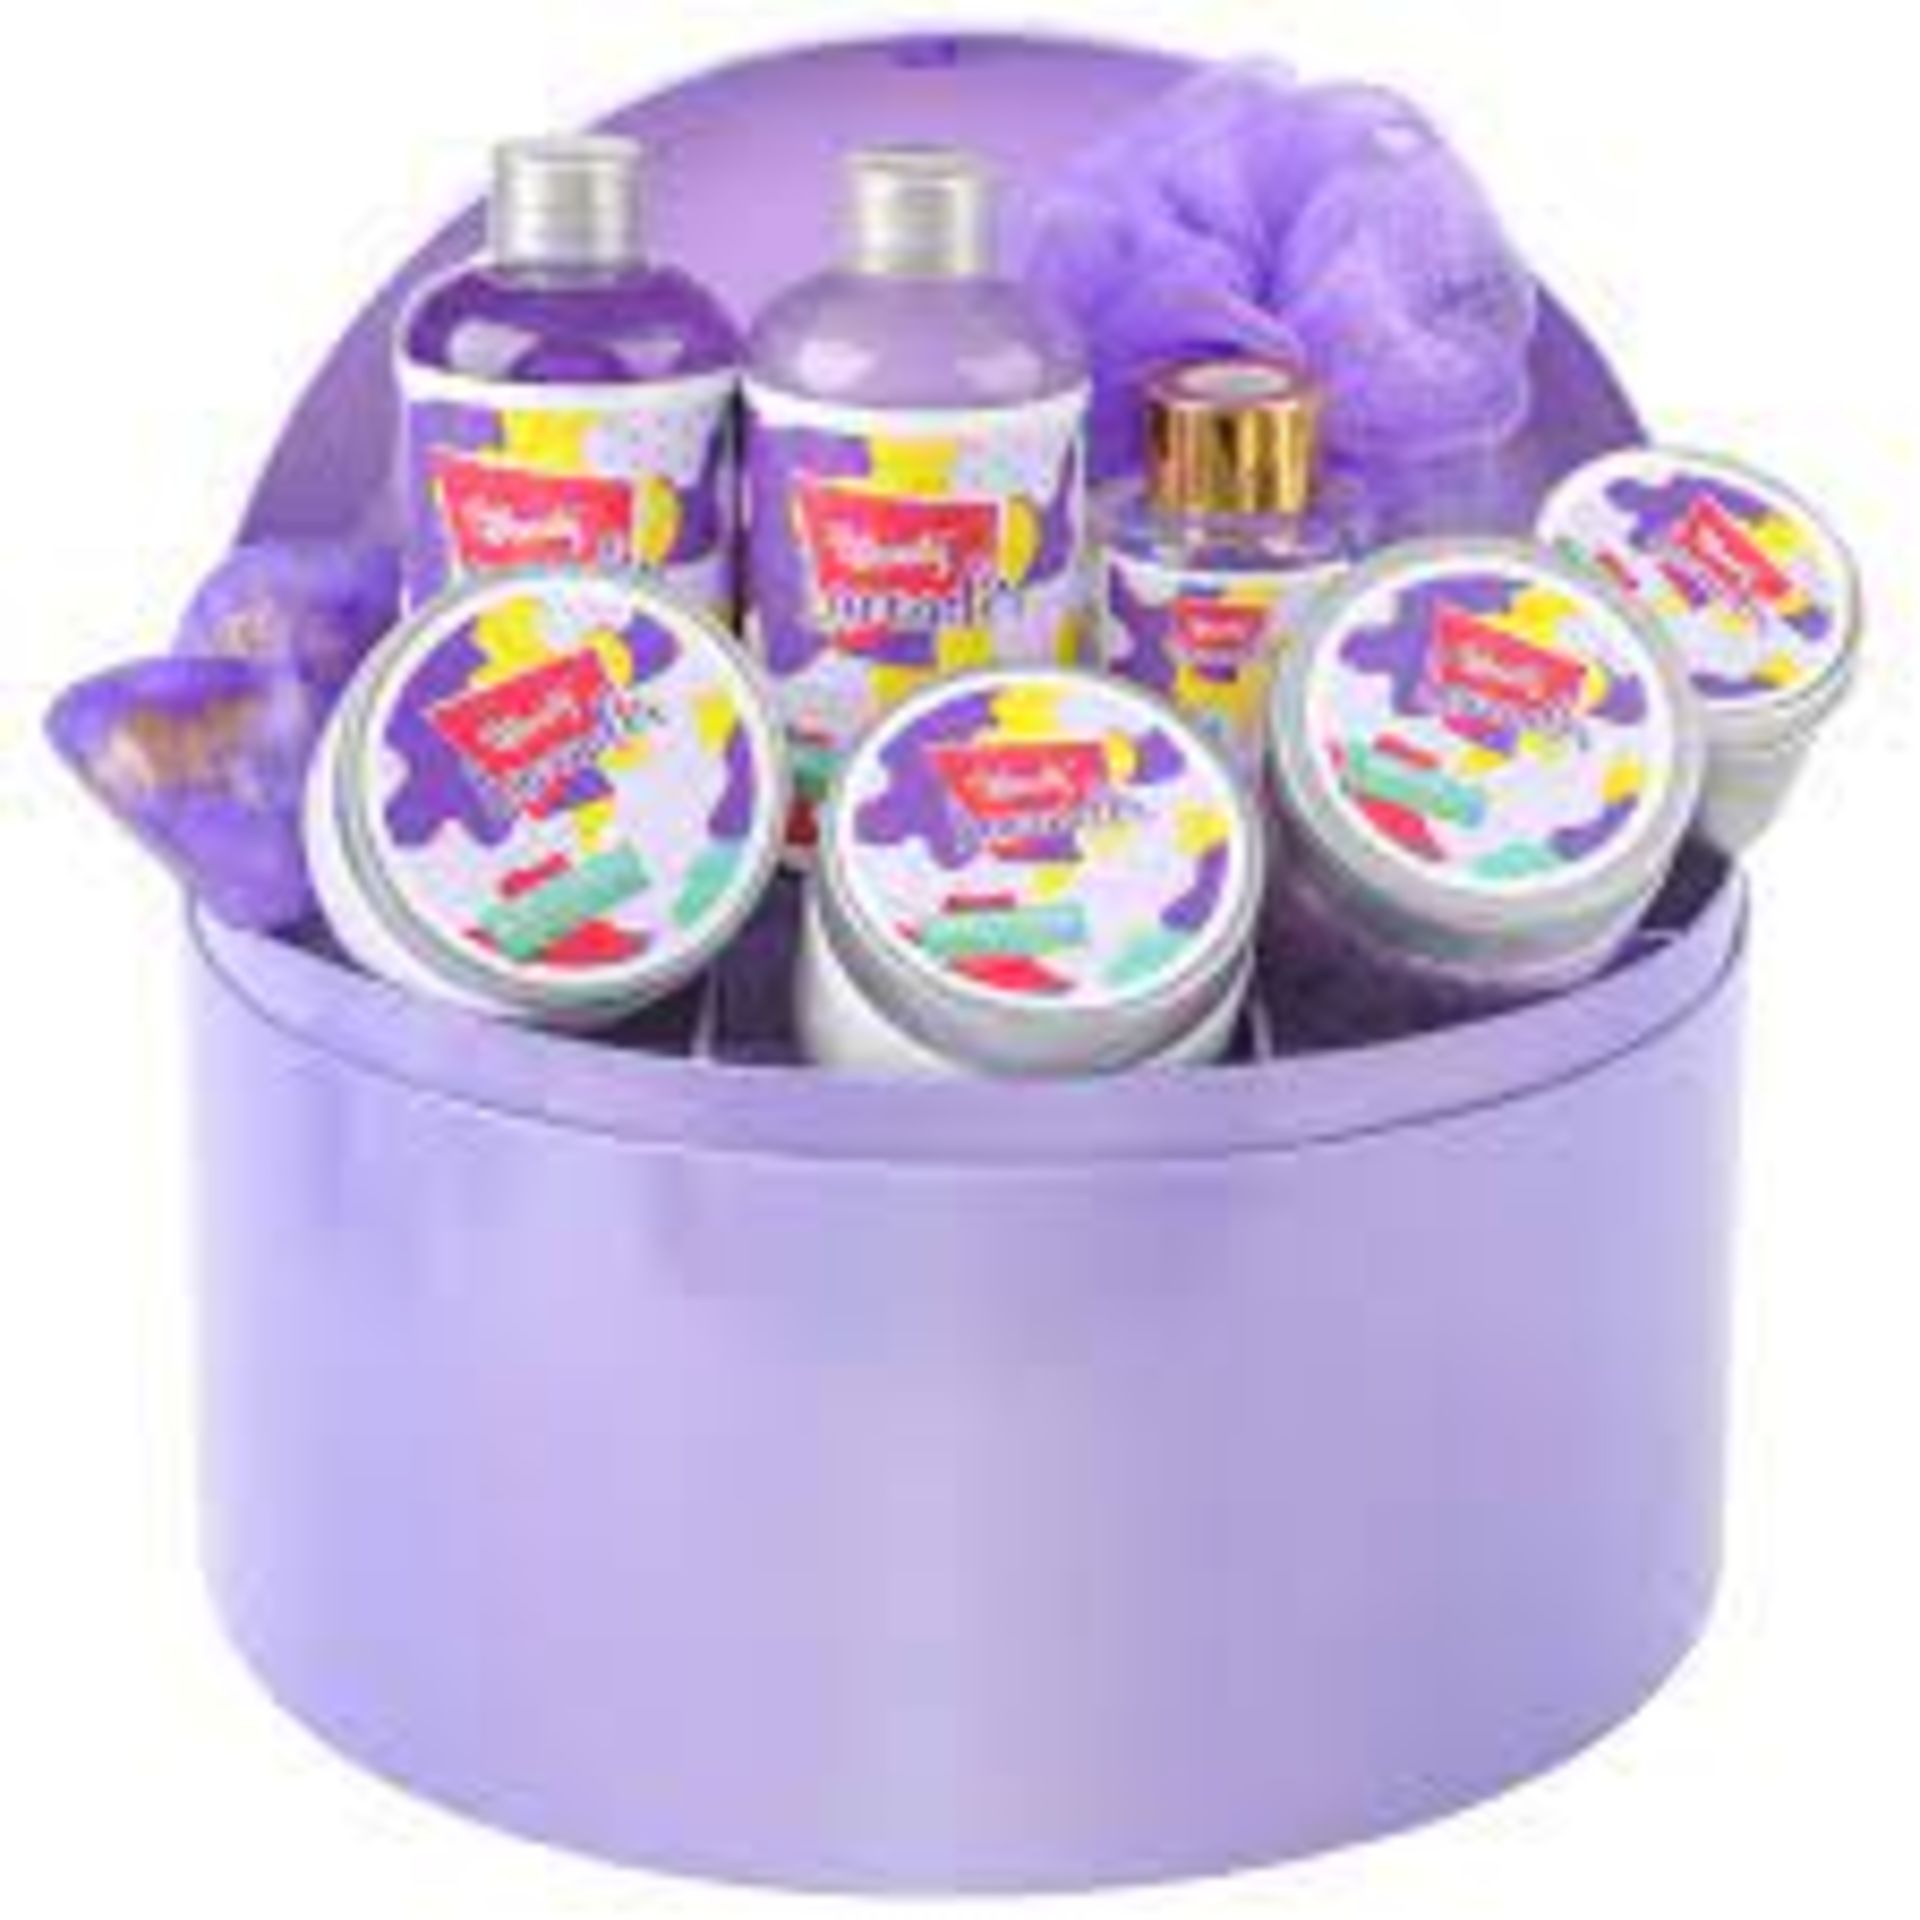 4 X Lavender Bath & Shower Jewelry Box. (SKU: BFF-BP20-001-1). 10pcs Spa Set Meet Your Needs: Luxury